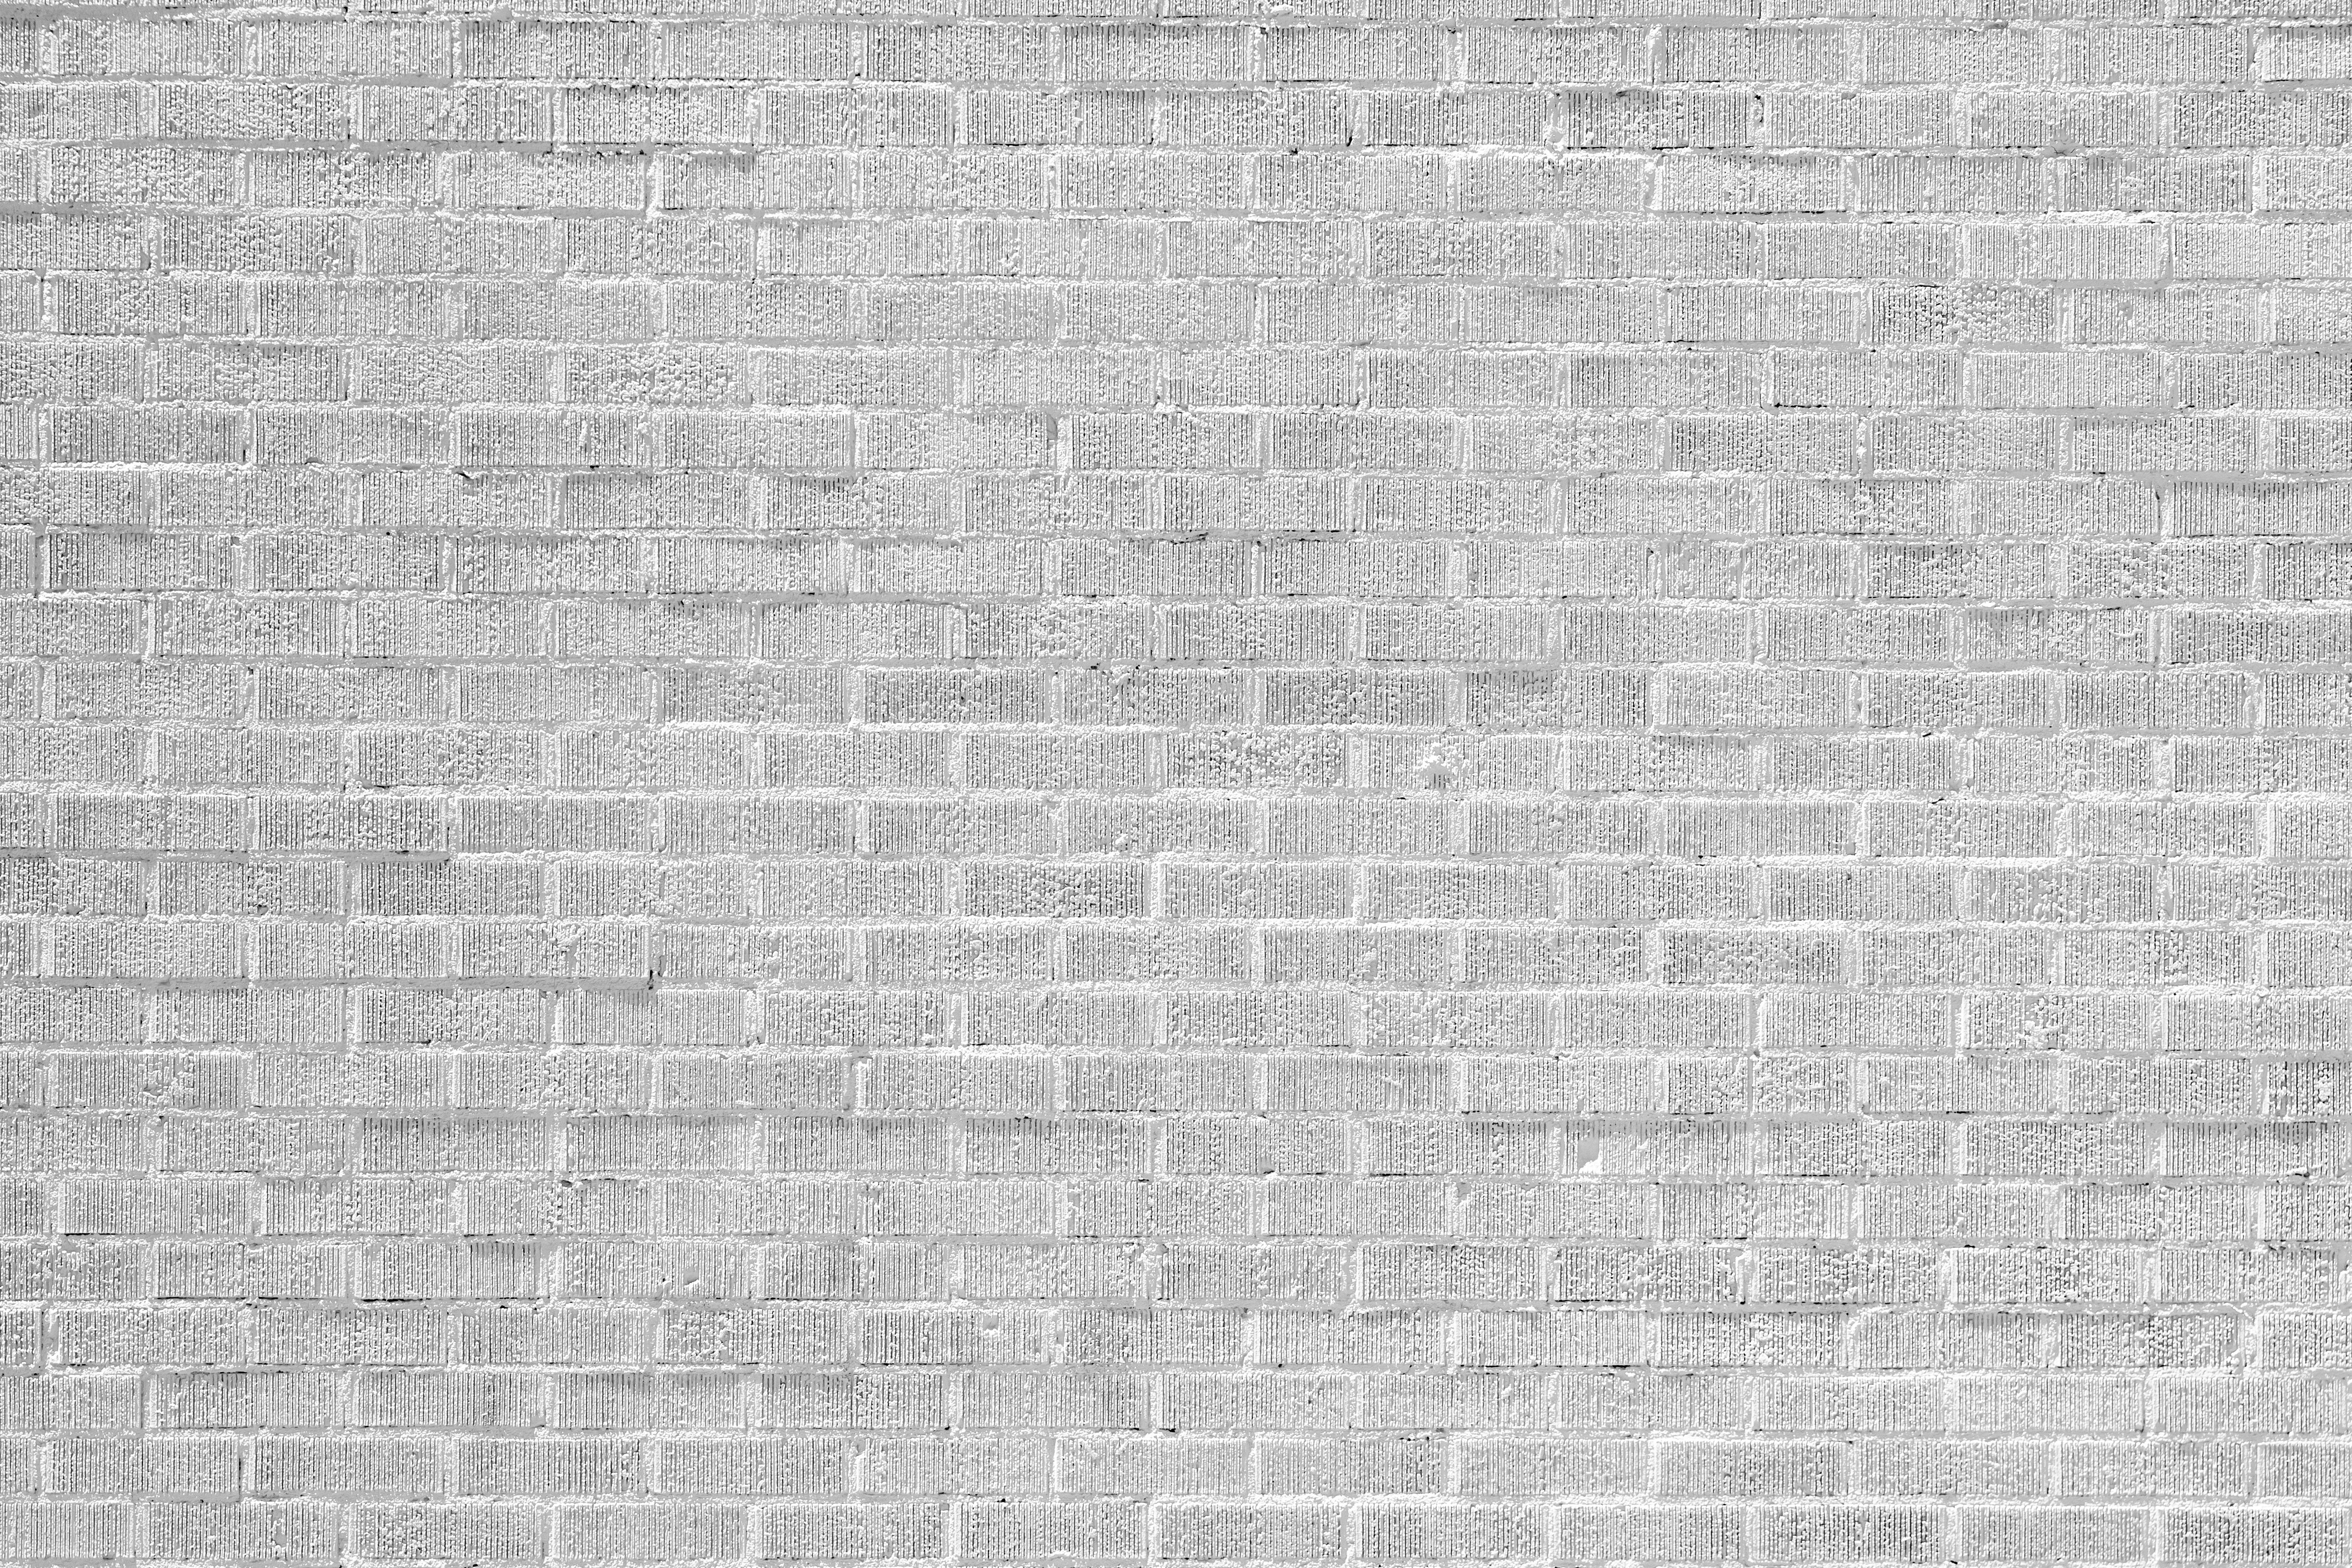 white and black brick wall